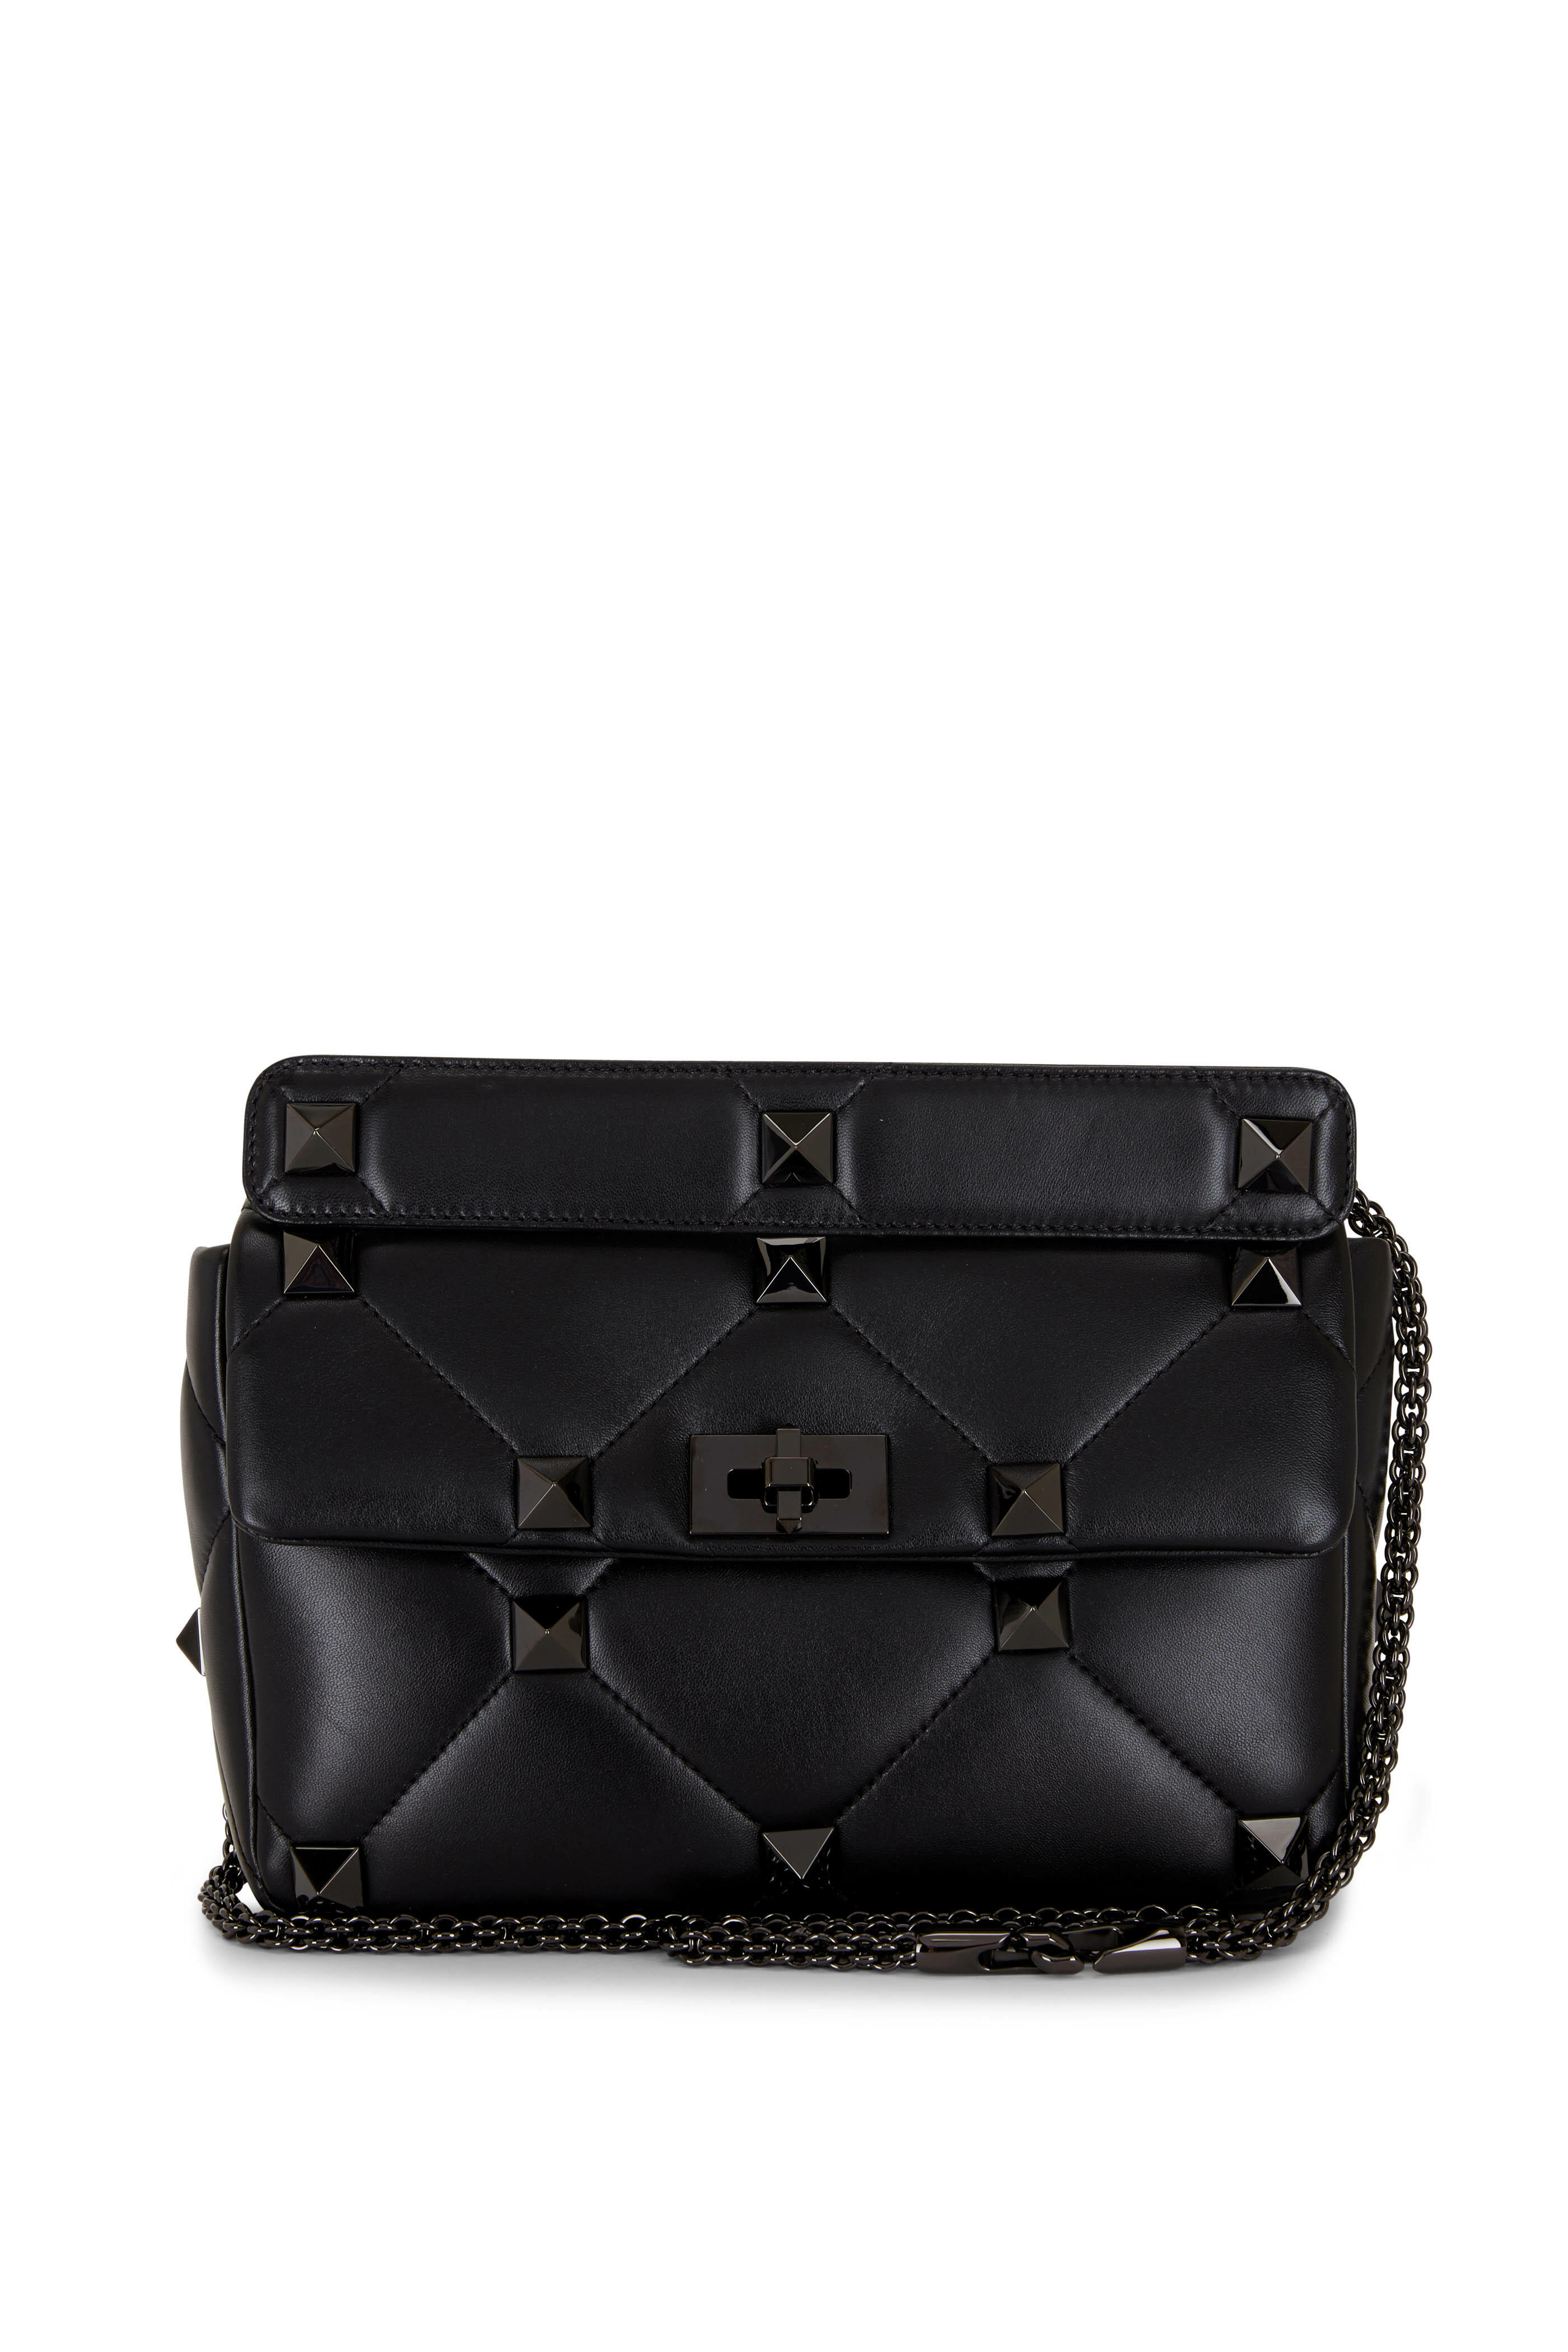 Valentino Garavani Women's Roman Stud Tan Leather Medium Shoulder Bag | by Mitchell Stores